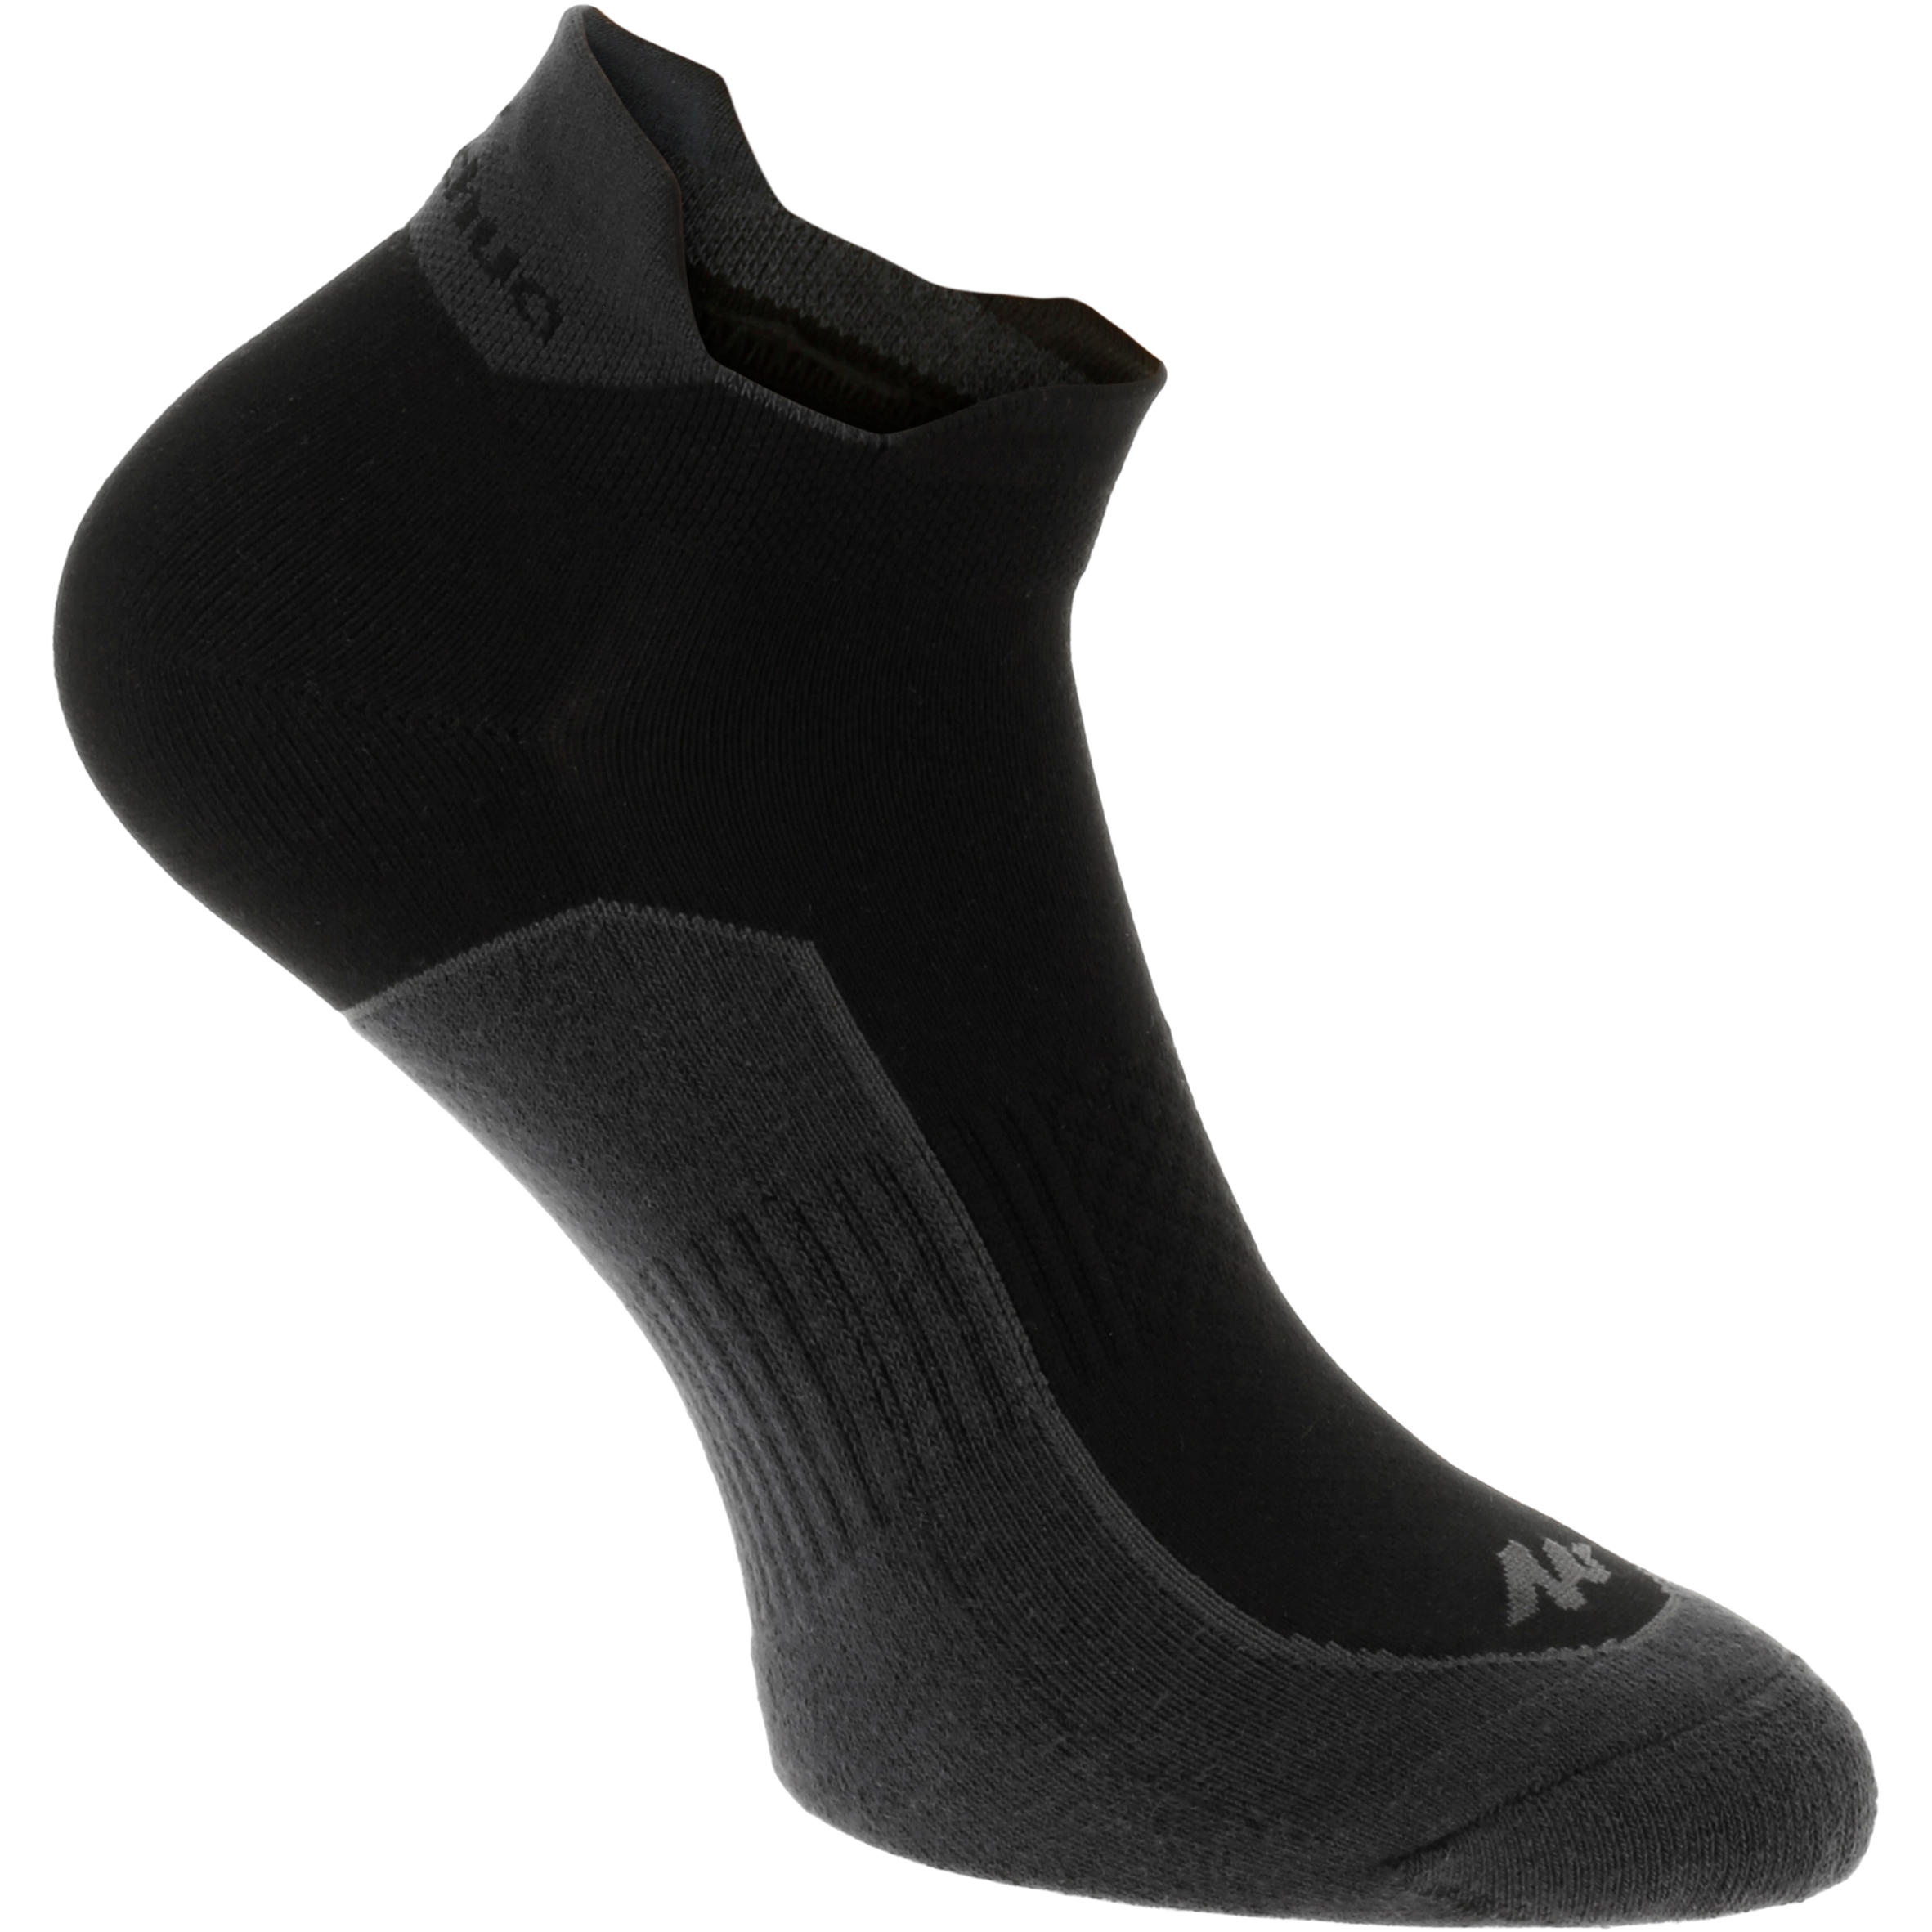 Country Walking Socks - 2 Pairs - Black 2/7